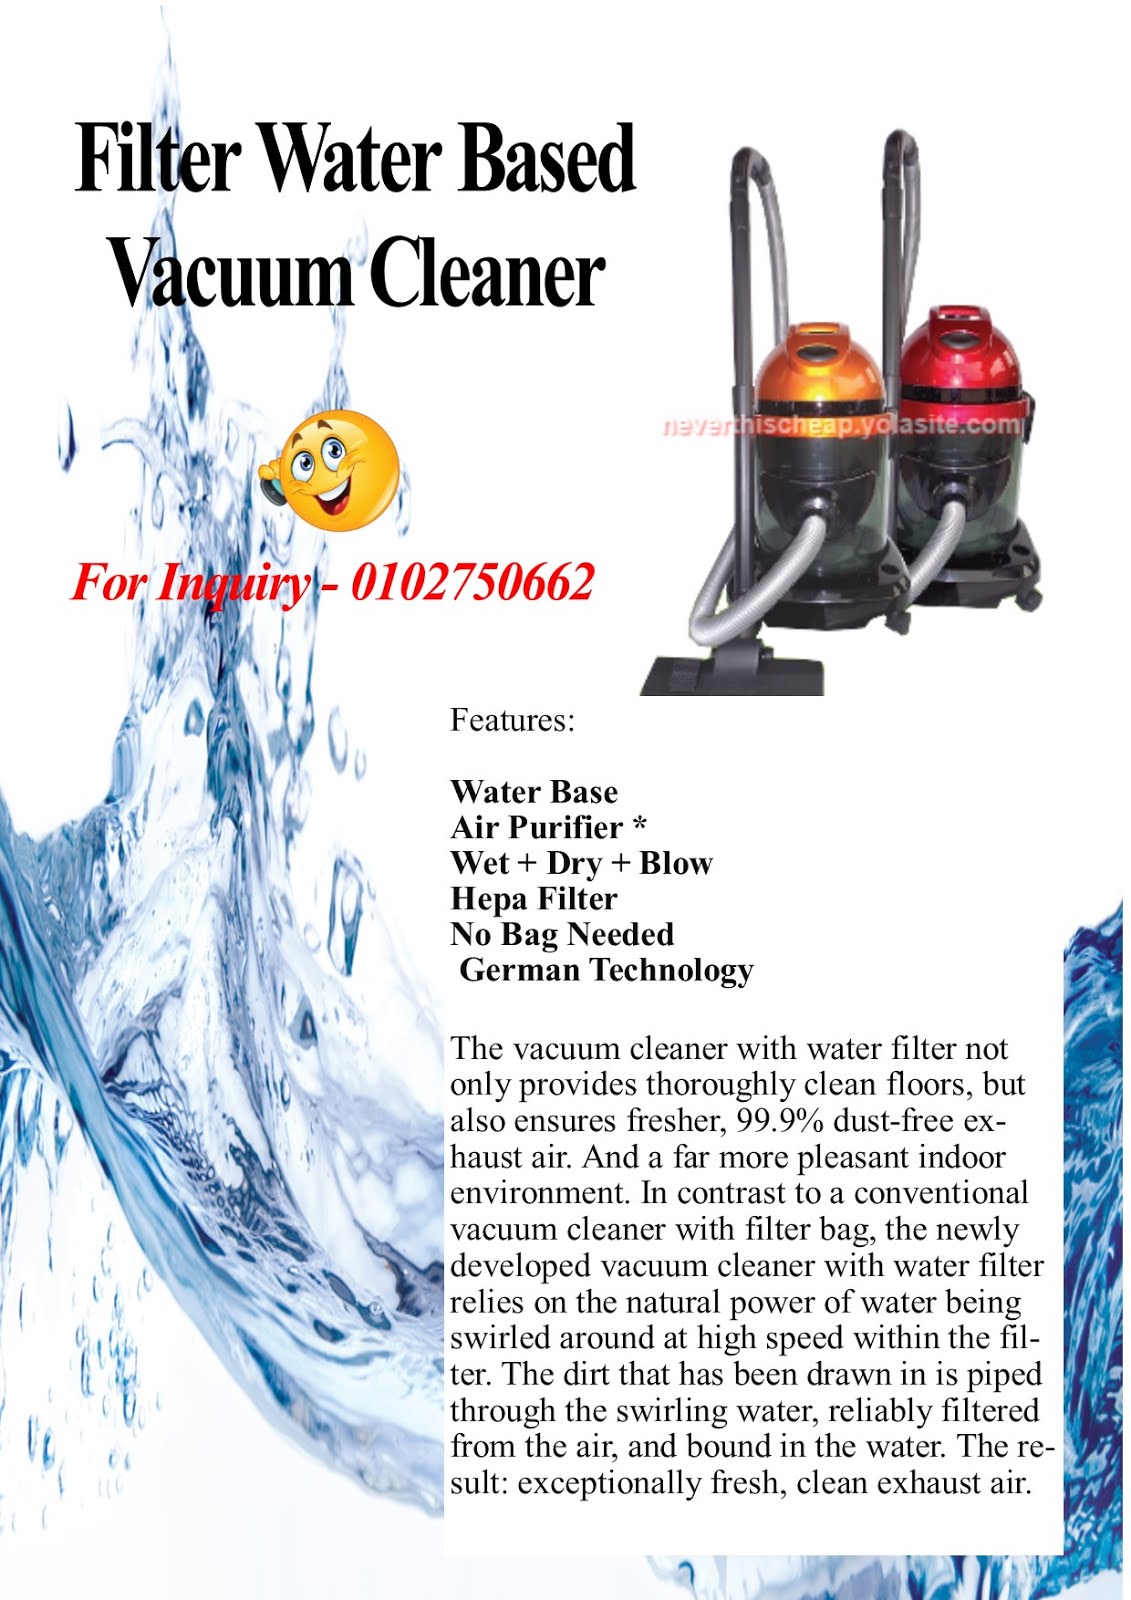 Filter Water Based Vacuum Cleaner